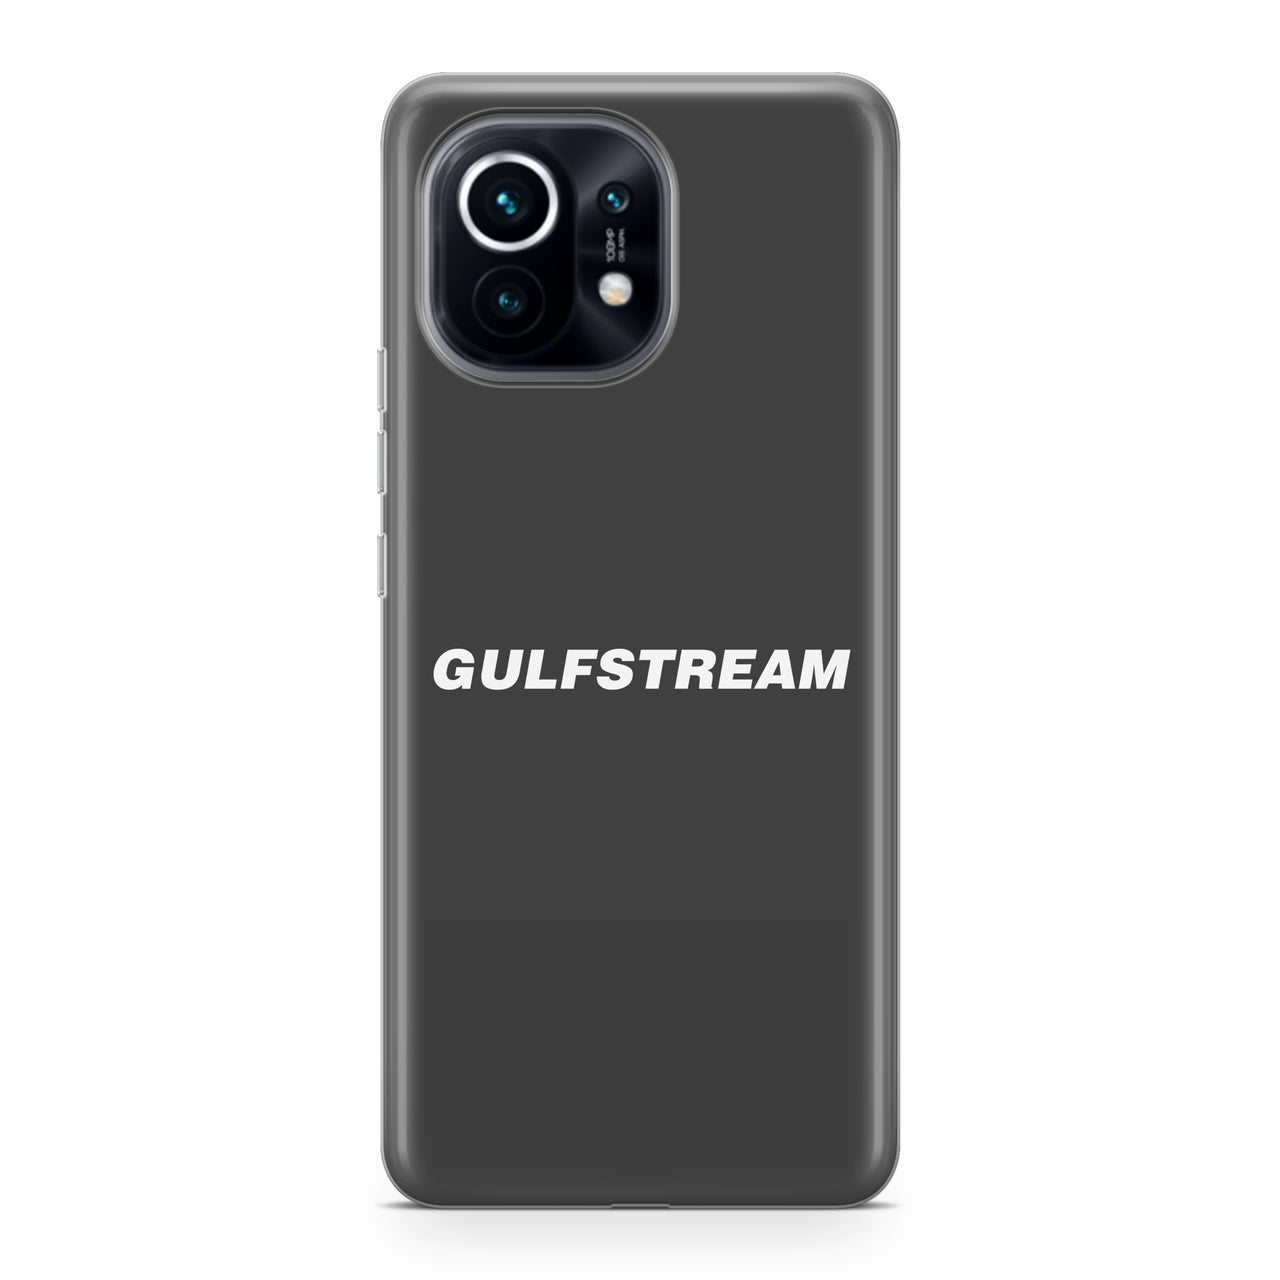 Gulfstream & Text Designed Xiaomi Cases